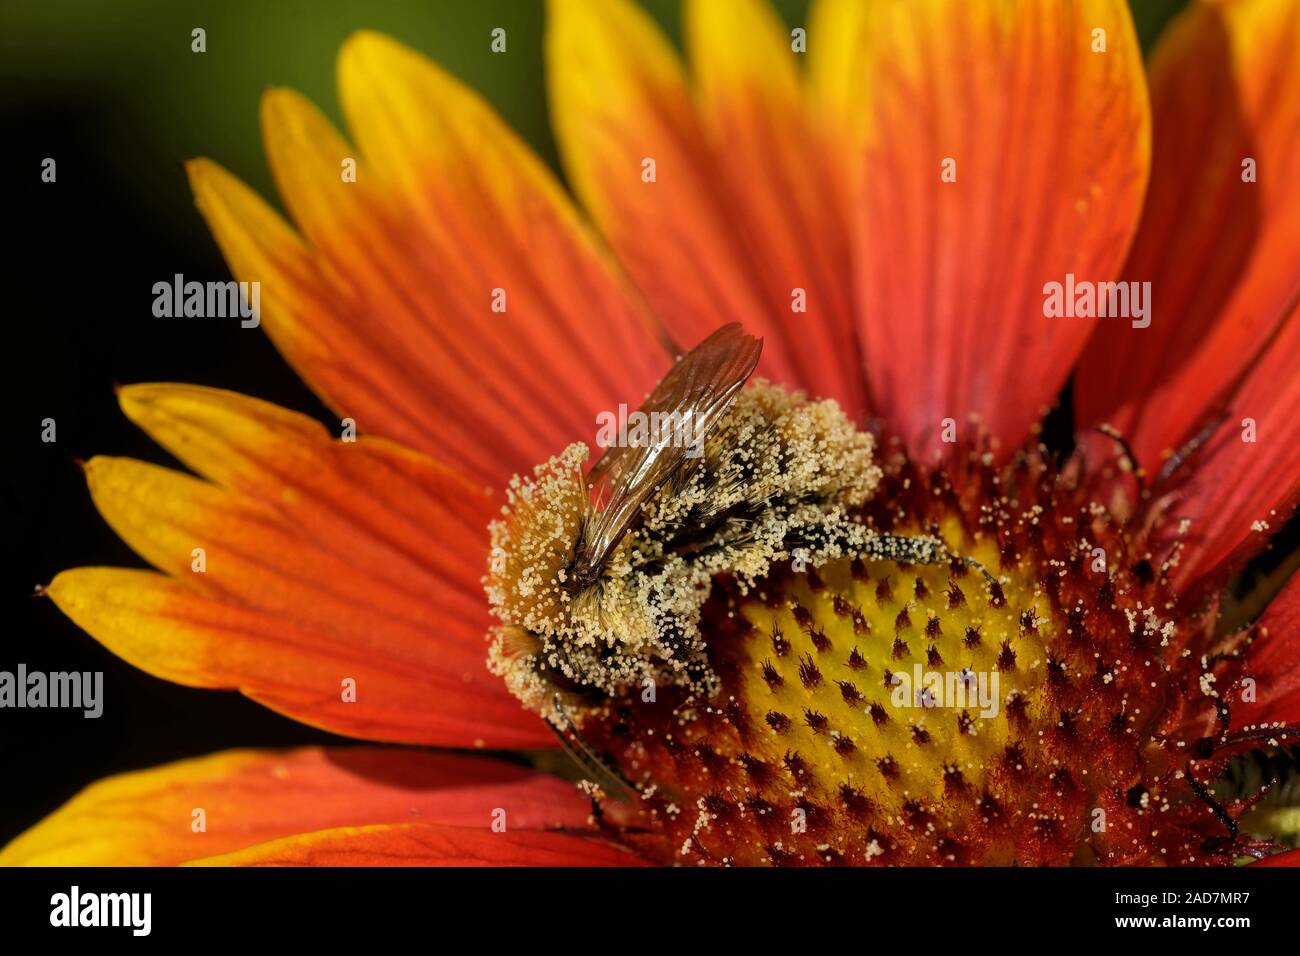 Cockade flower with bumblebee Stock Photo